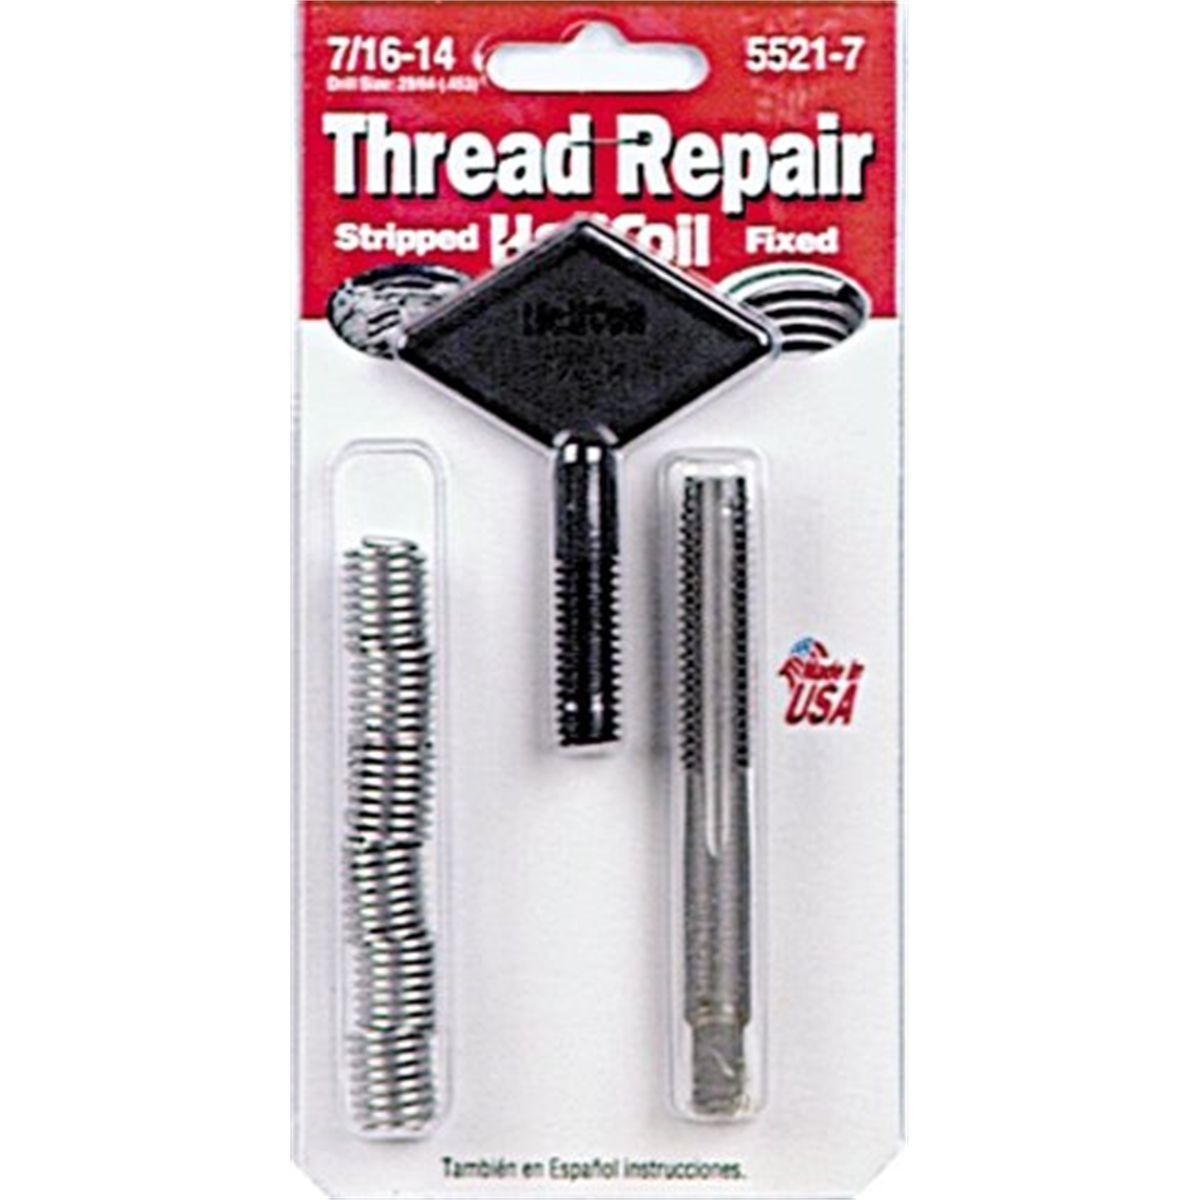 HeliCoil 7/16-20 x .656 Thread Repair Inserts Qty 25